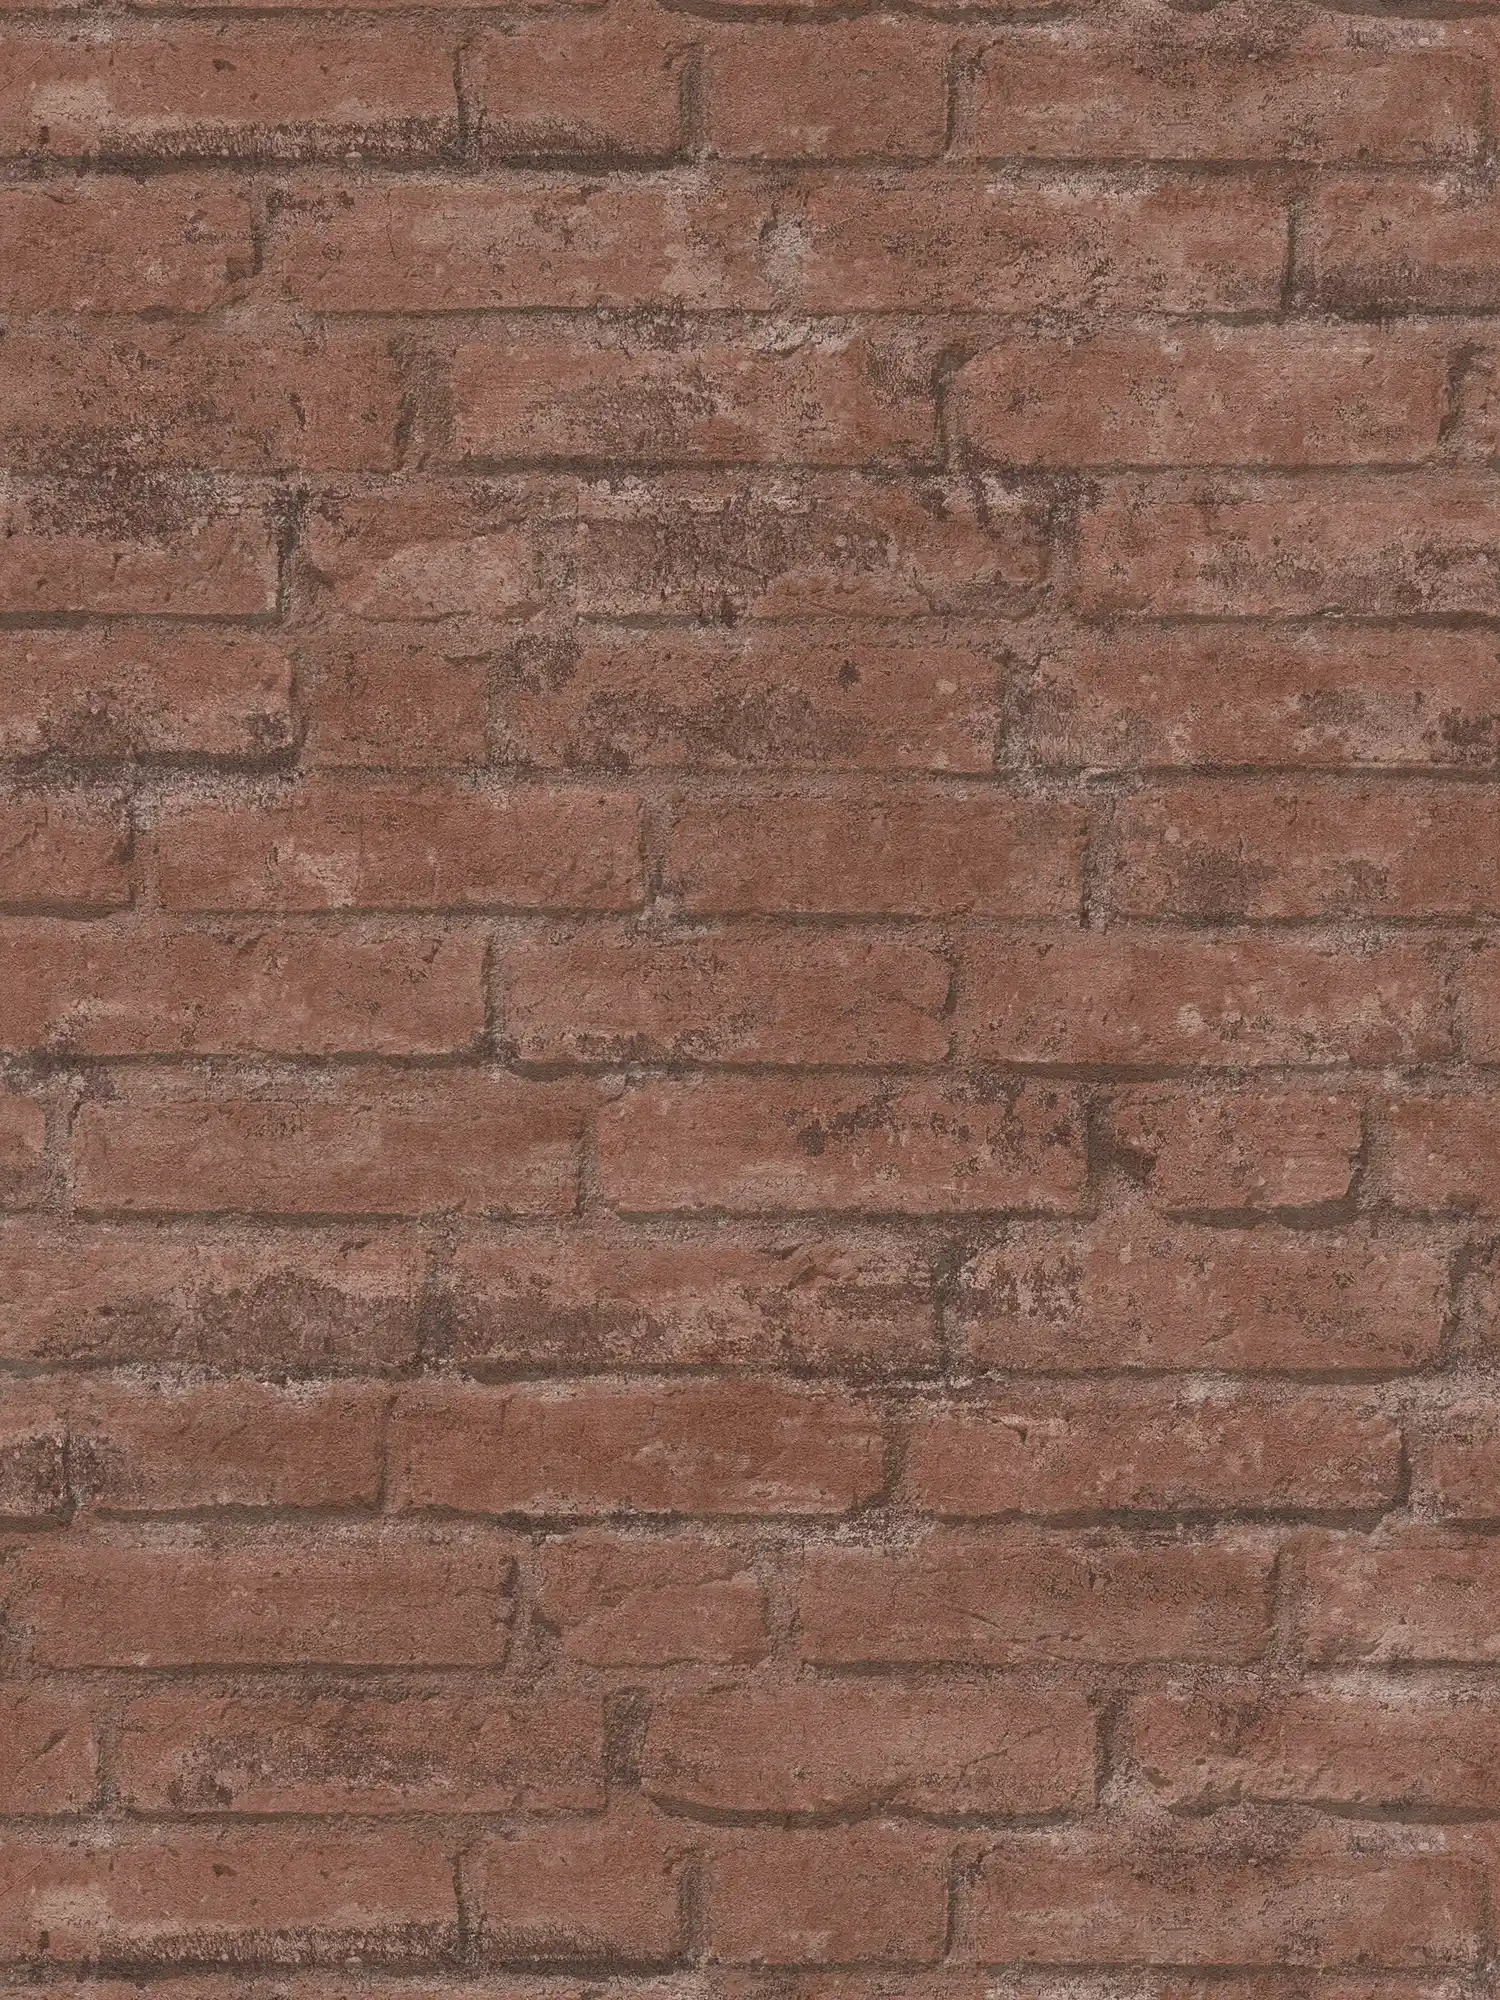 Steintapete in rustikaler Maueroptik, Industrial Design – Braun, Rot
